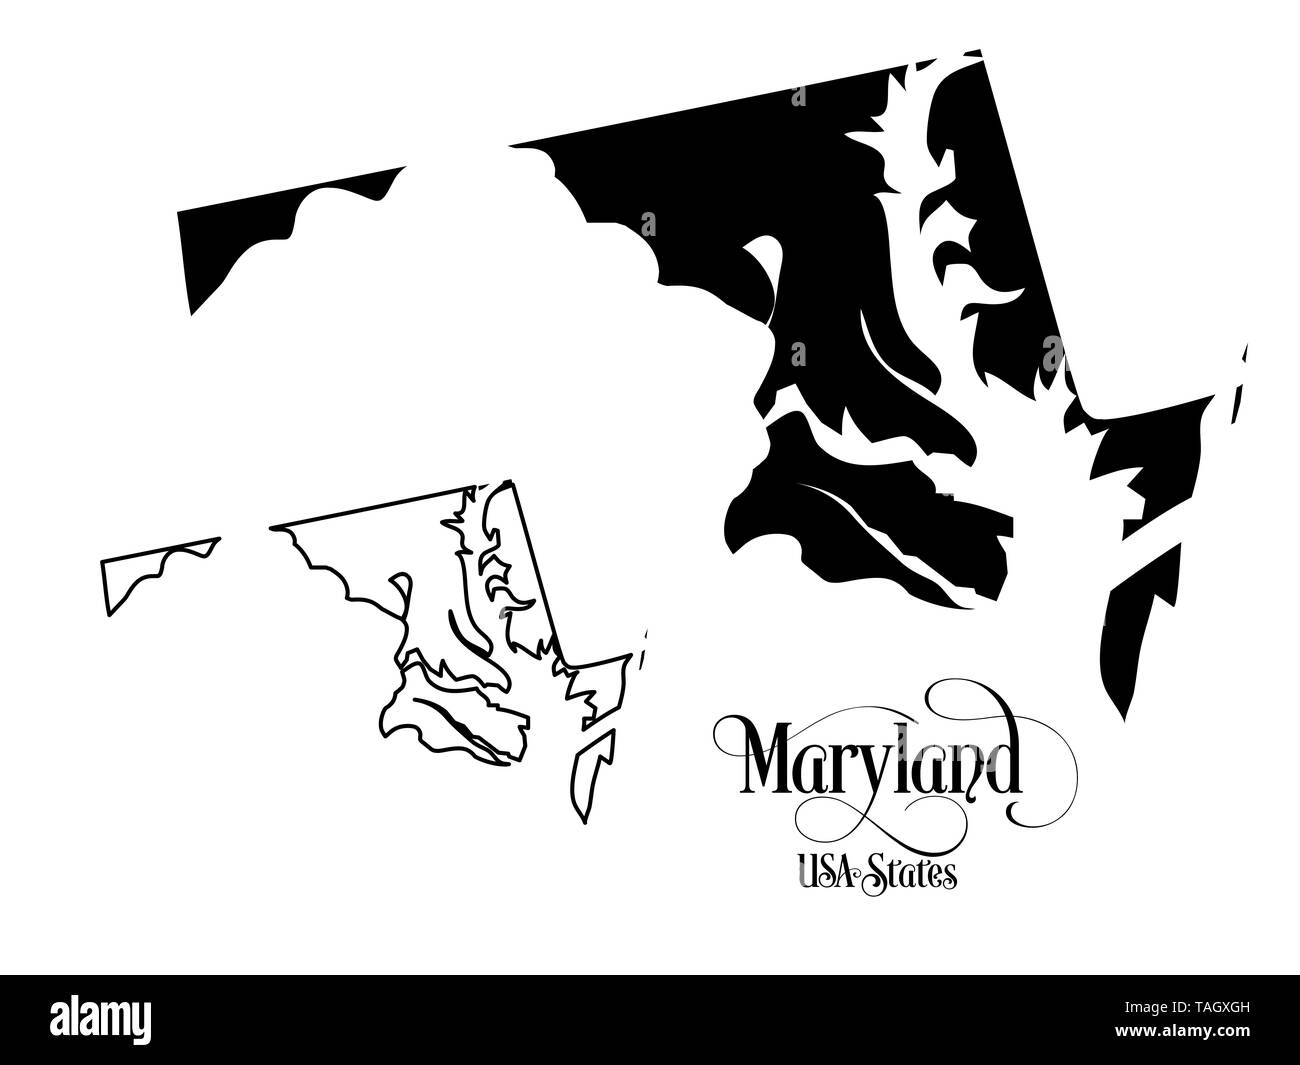 Map of The United States of America (USA) State of Maryland - Illustration on White Background. Stock Photo